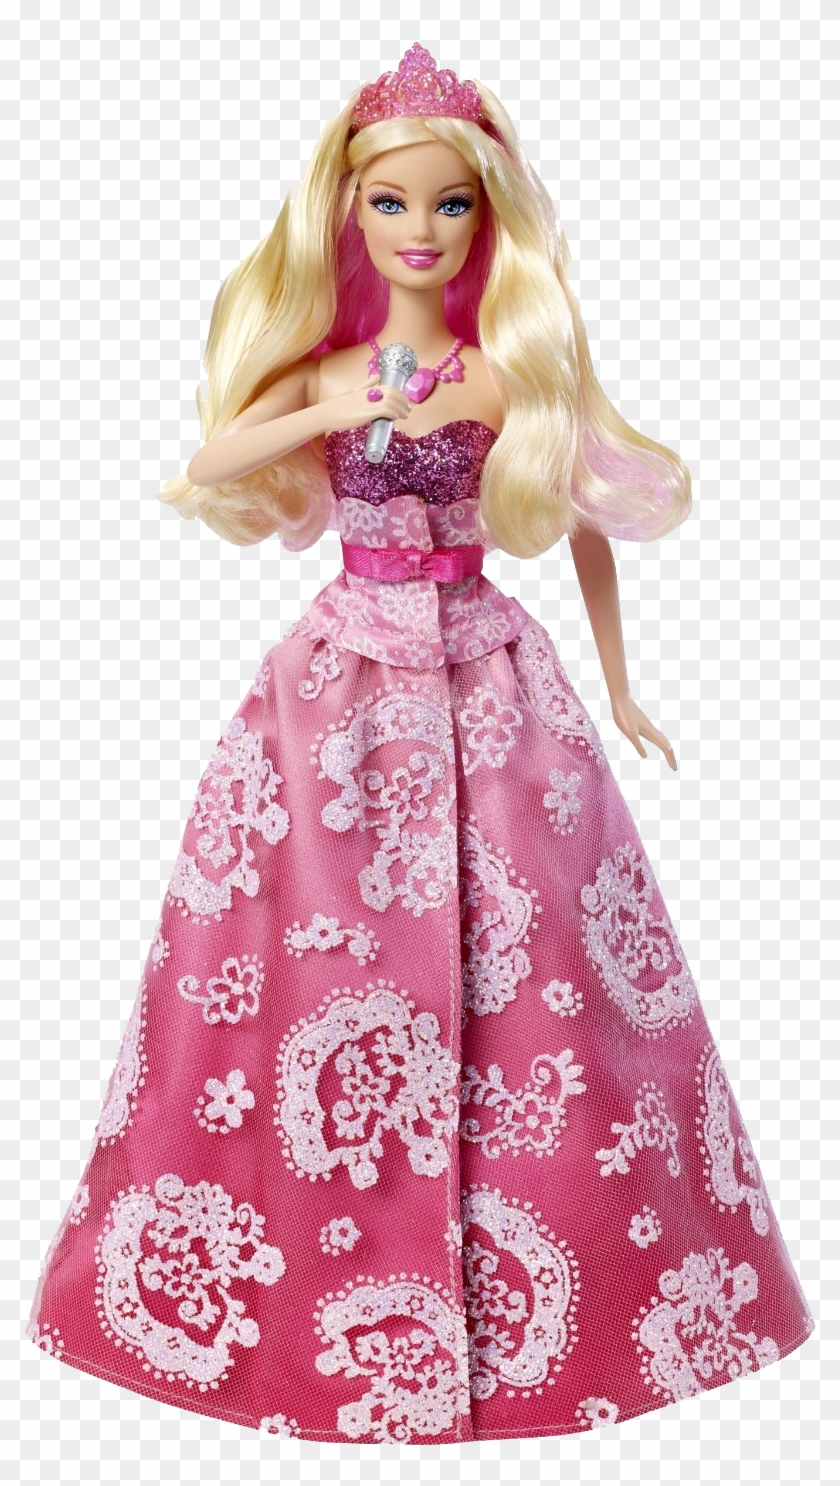 Barbie Doll Png Transparent Images - Barbie Princess And The Popstar Dolls,  Png Download - 803x1412(#295649) - PngFind